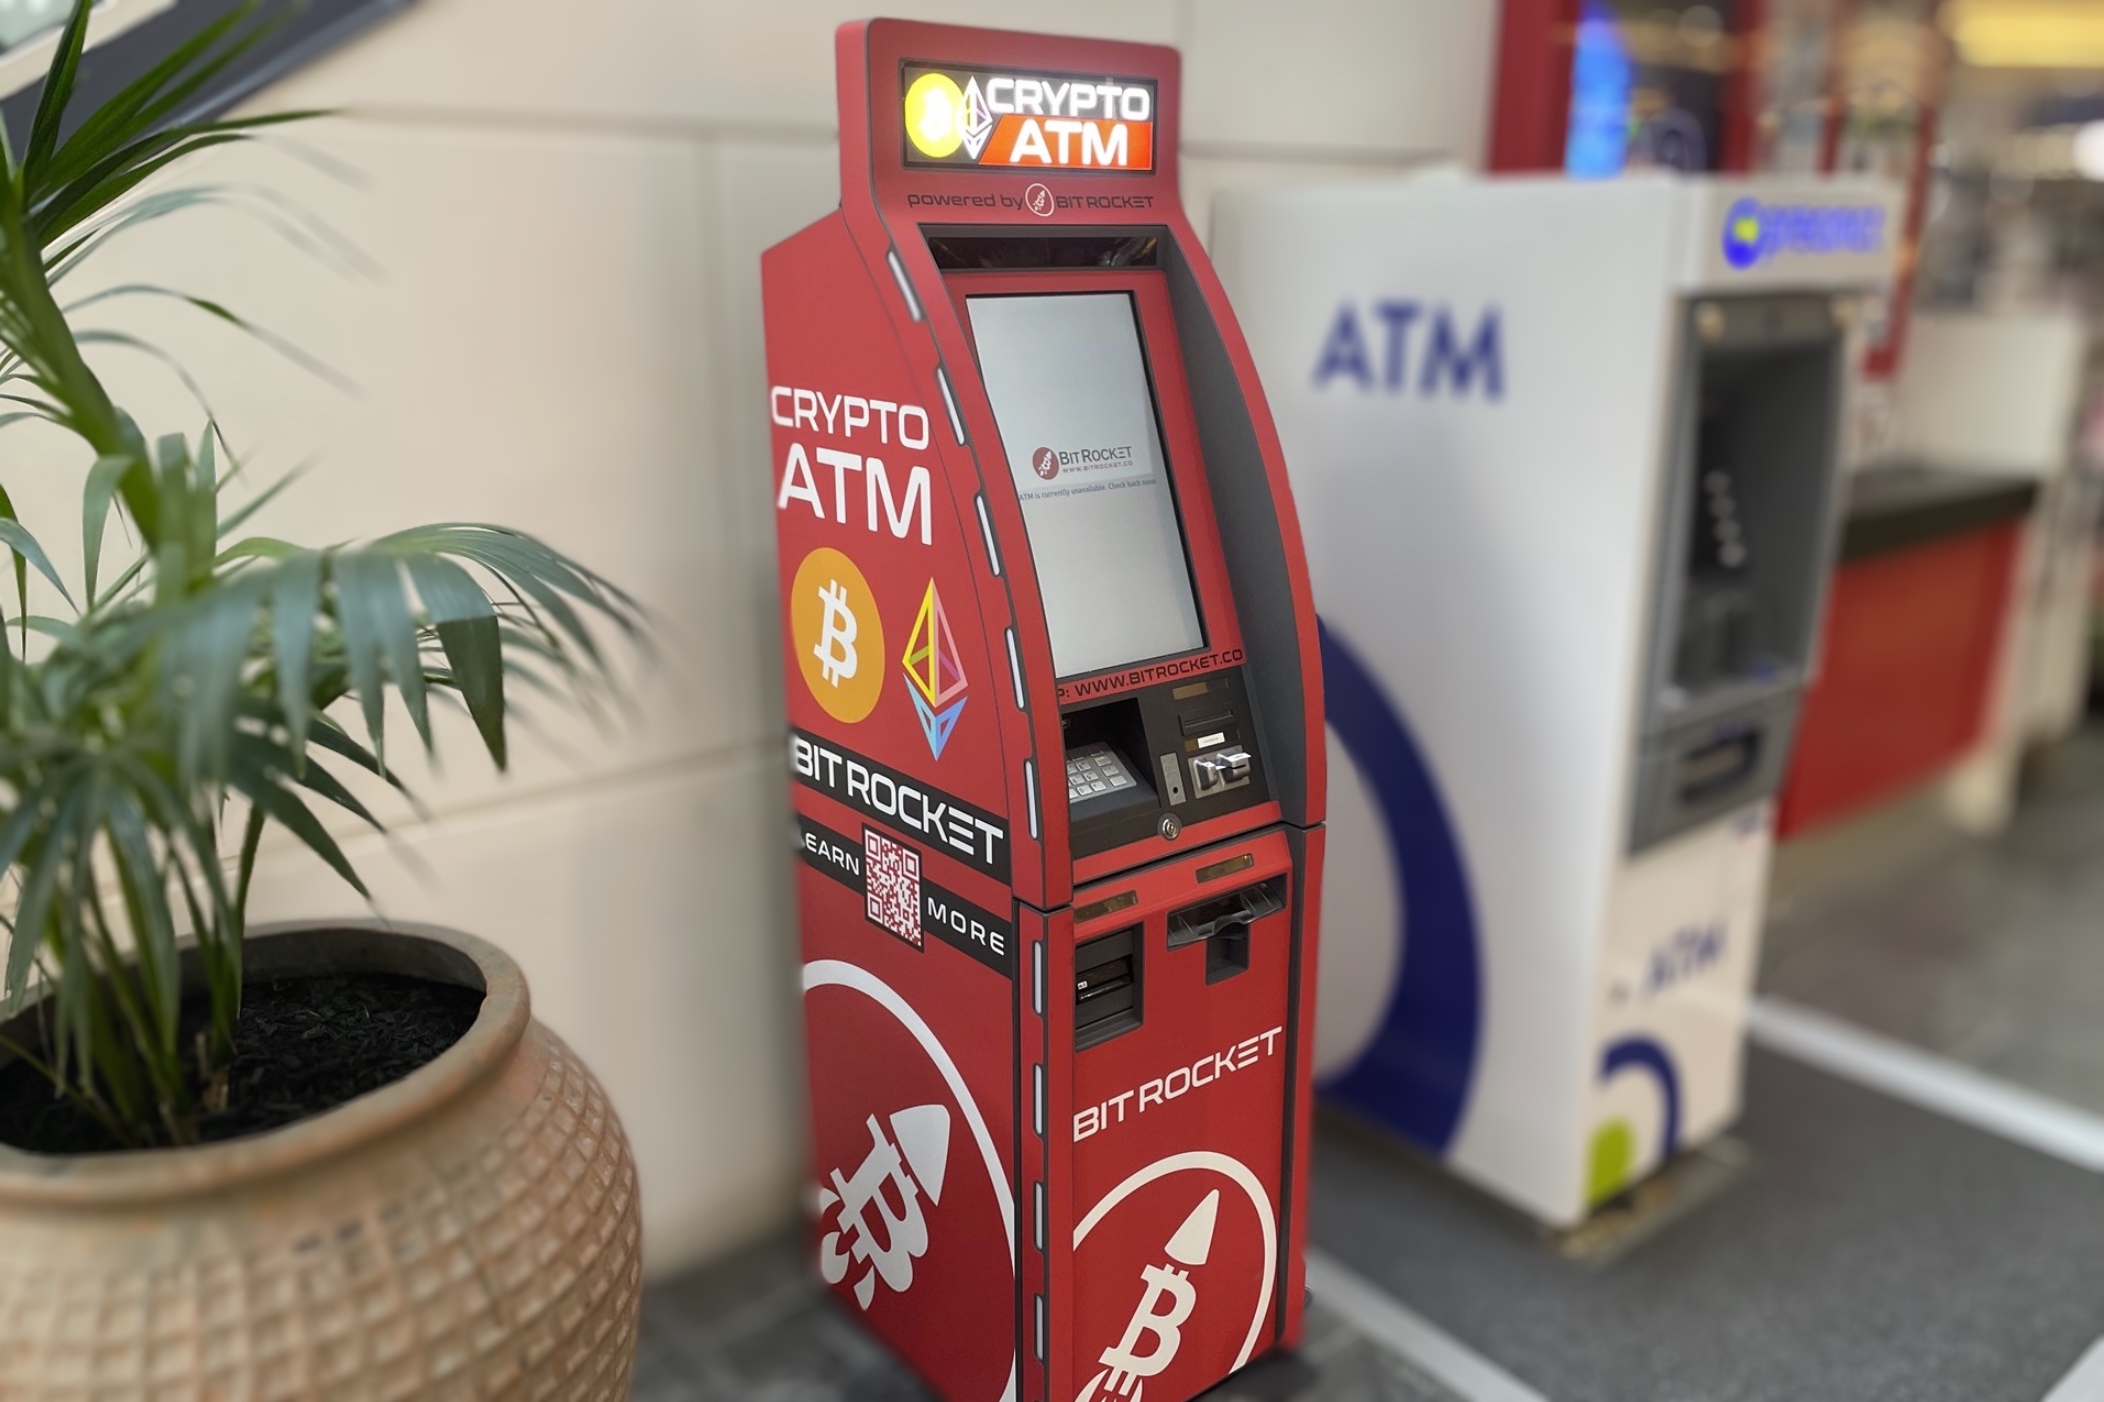 BitRocket Bitcoin ATM at Chermside, Brisbane Queensland